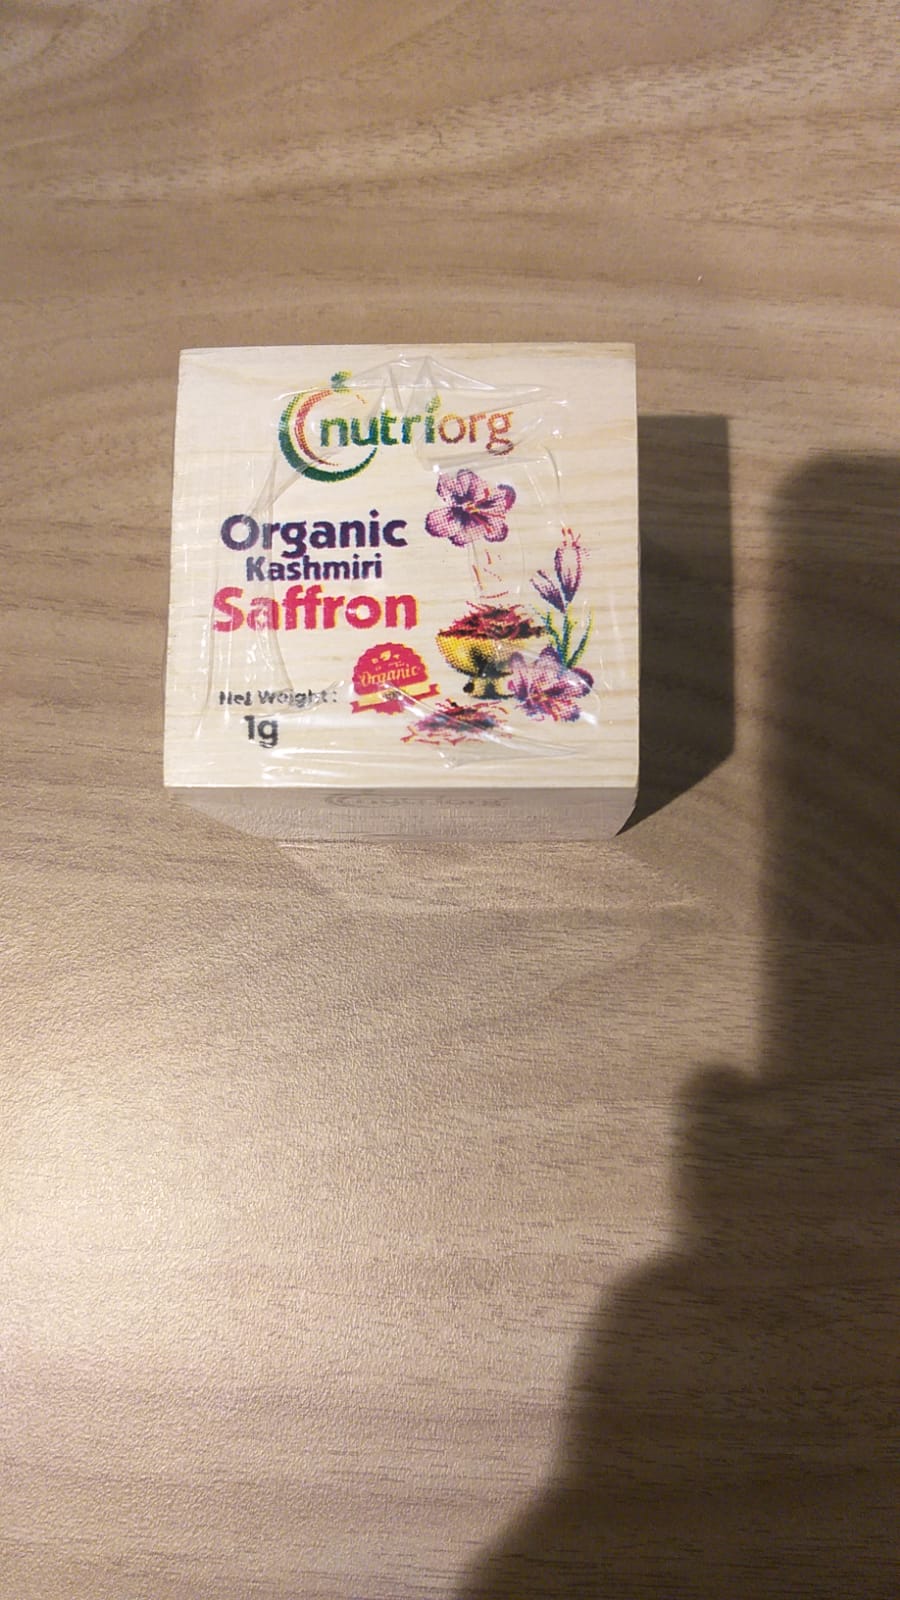 Organic Kashmiri Saffron (Nutriorg)